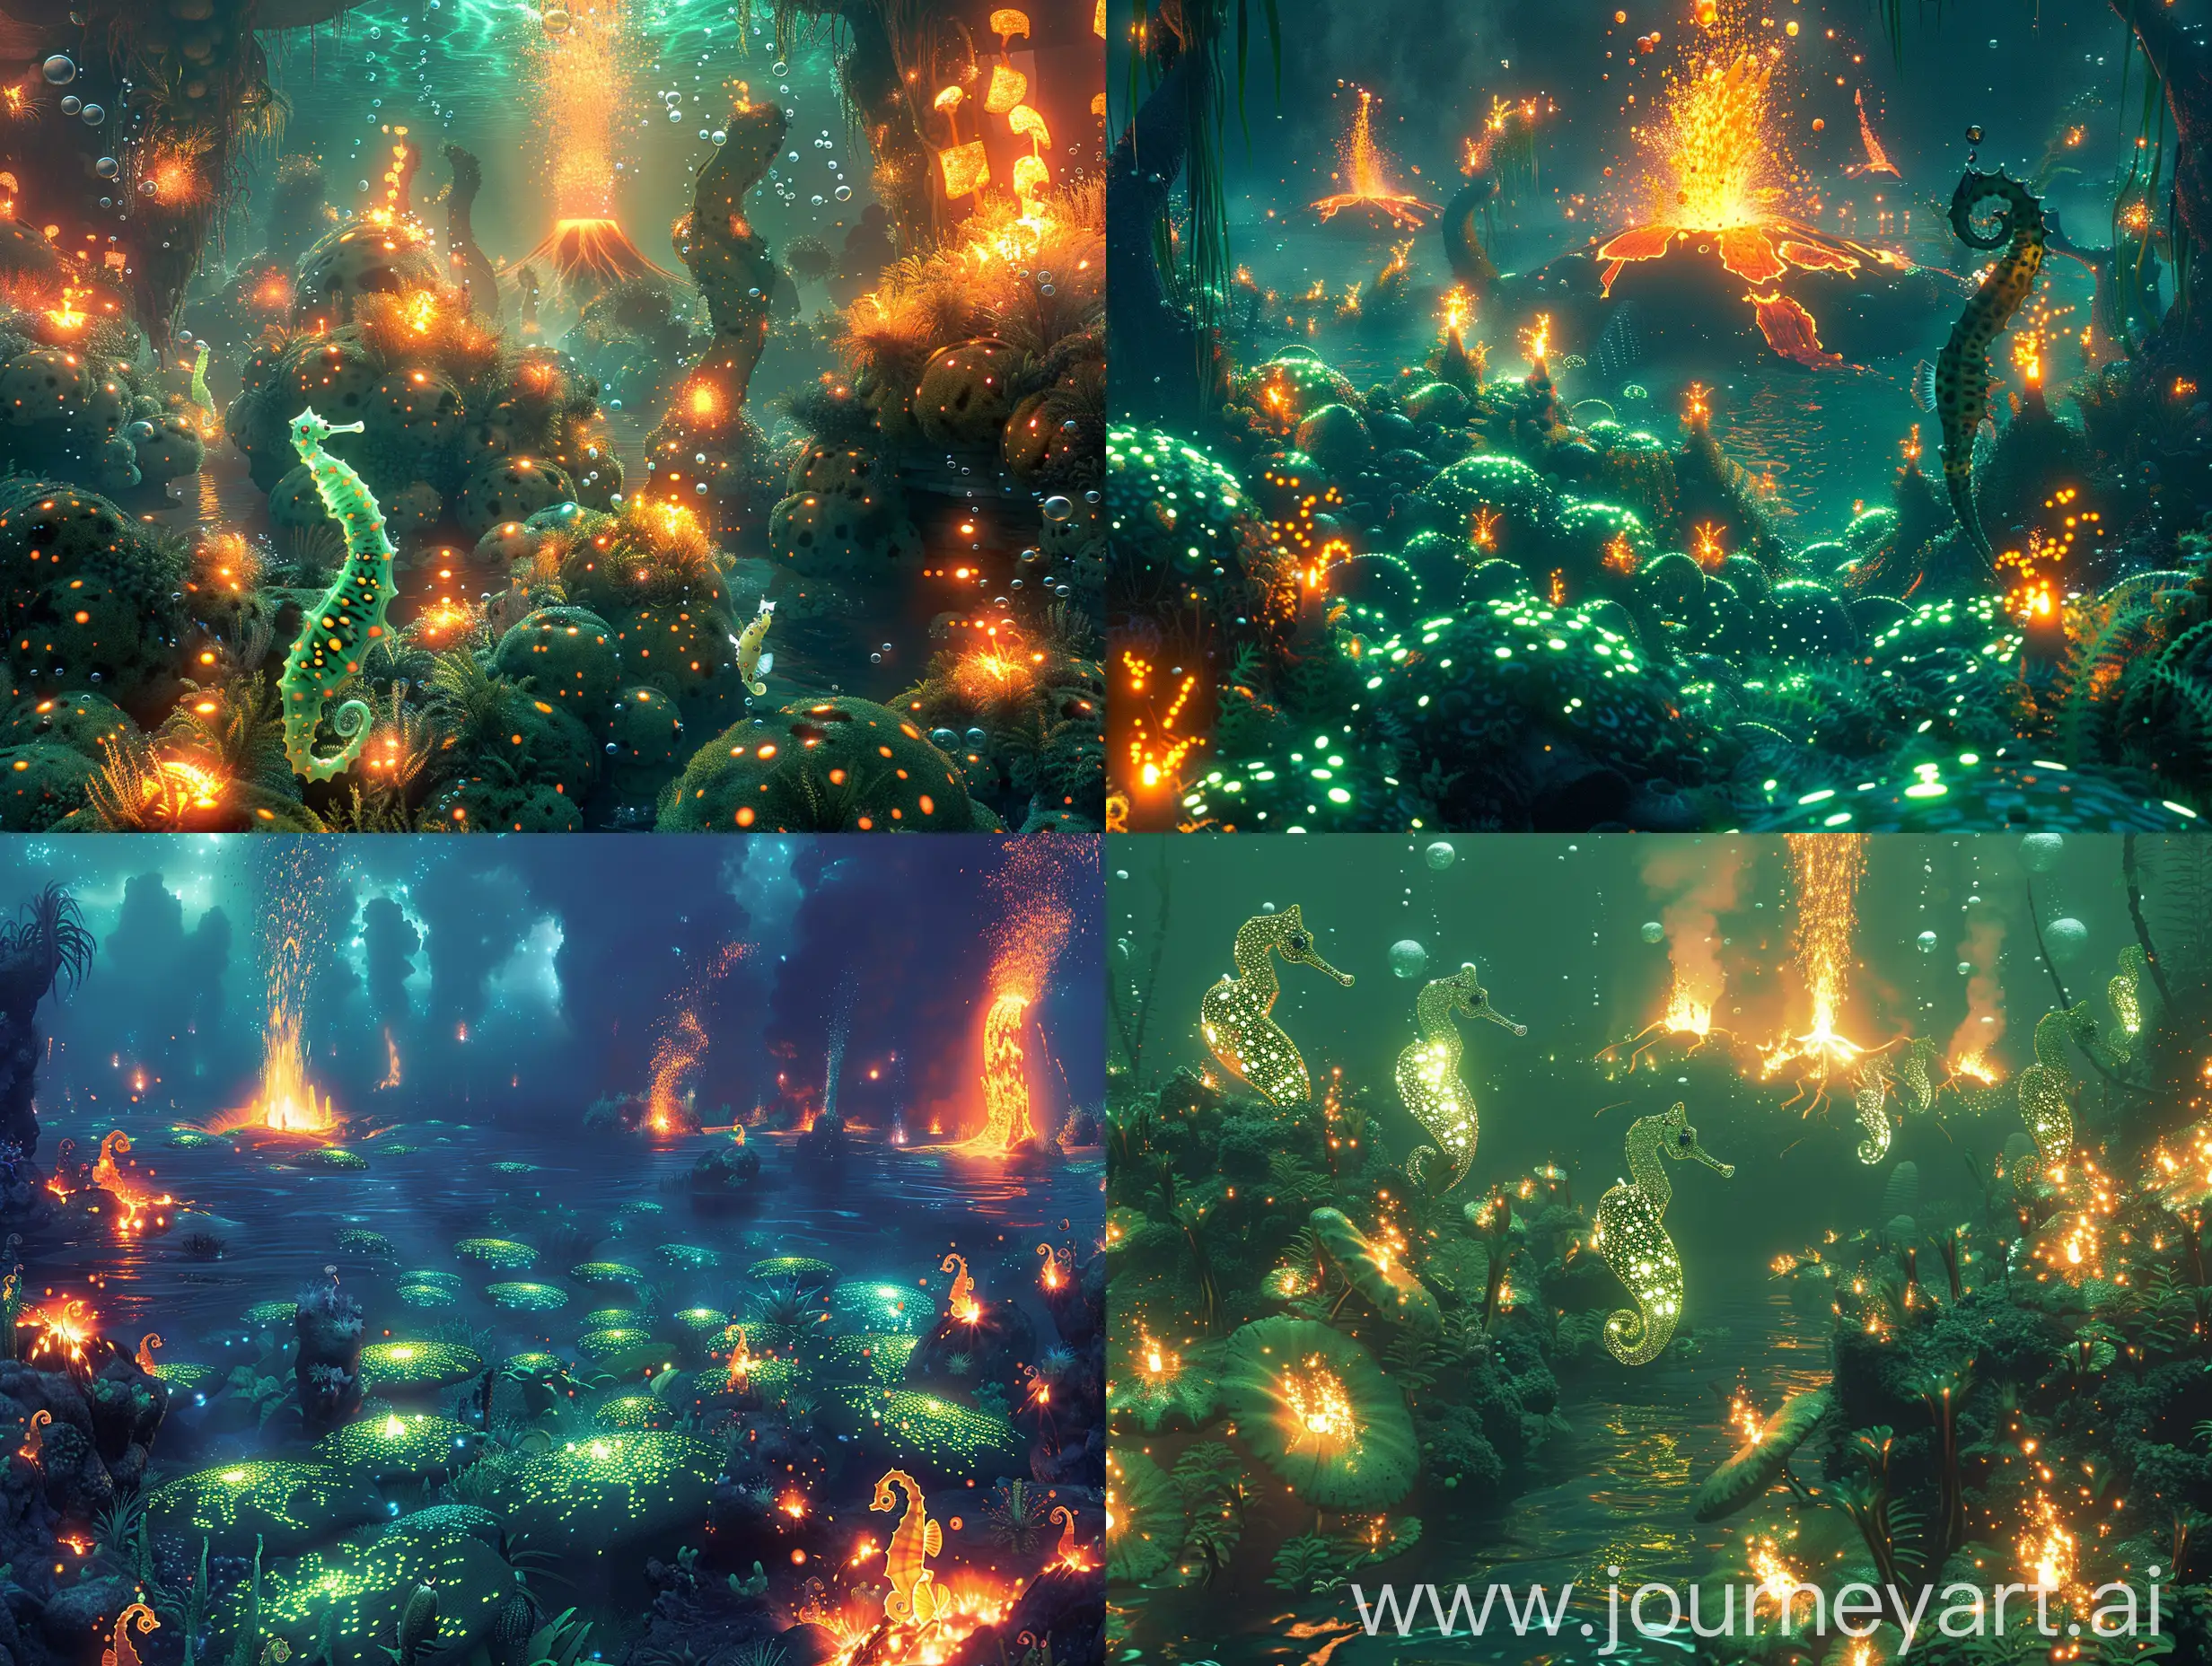 Volcanic-Underwater-Kingdom-Glowing-Algae-and-Dancing-Creatures